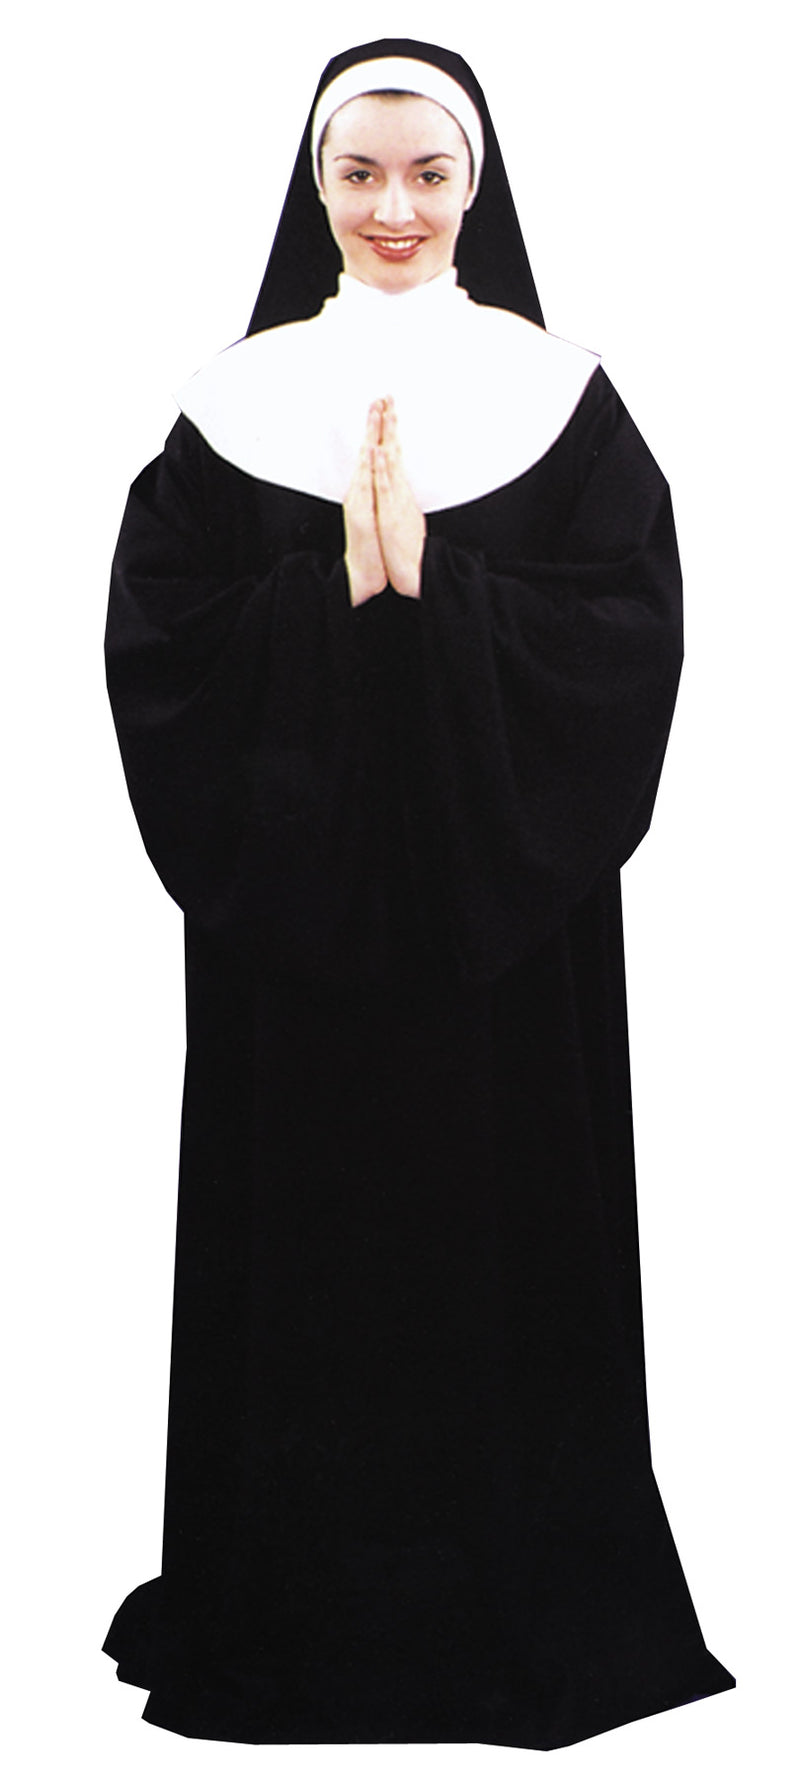 Nun Adult Costume-Costume-1-AC-45-Classic Horror Shop